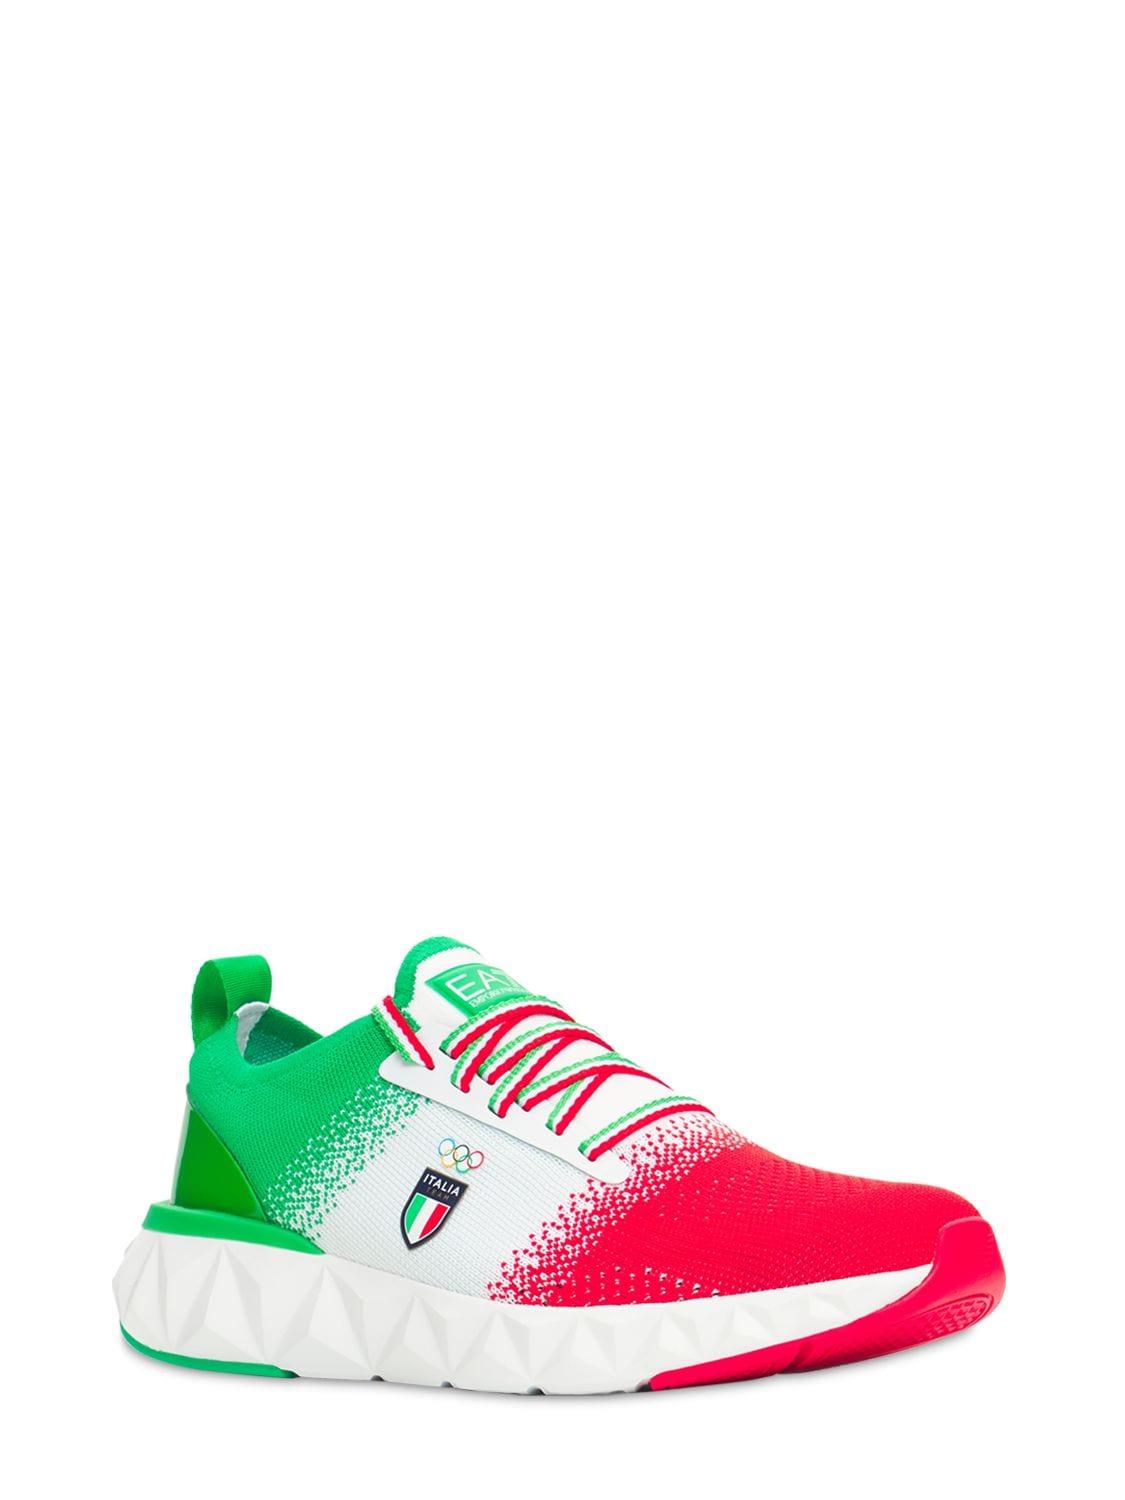 EA7 Italia Olympic Team Sneakers for Men | Lyst